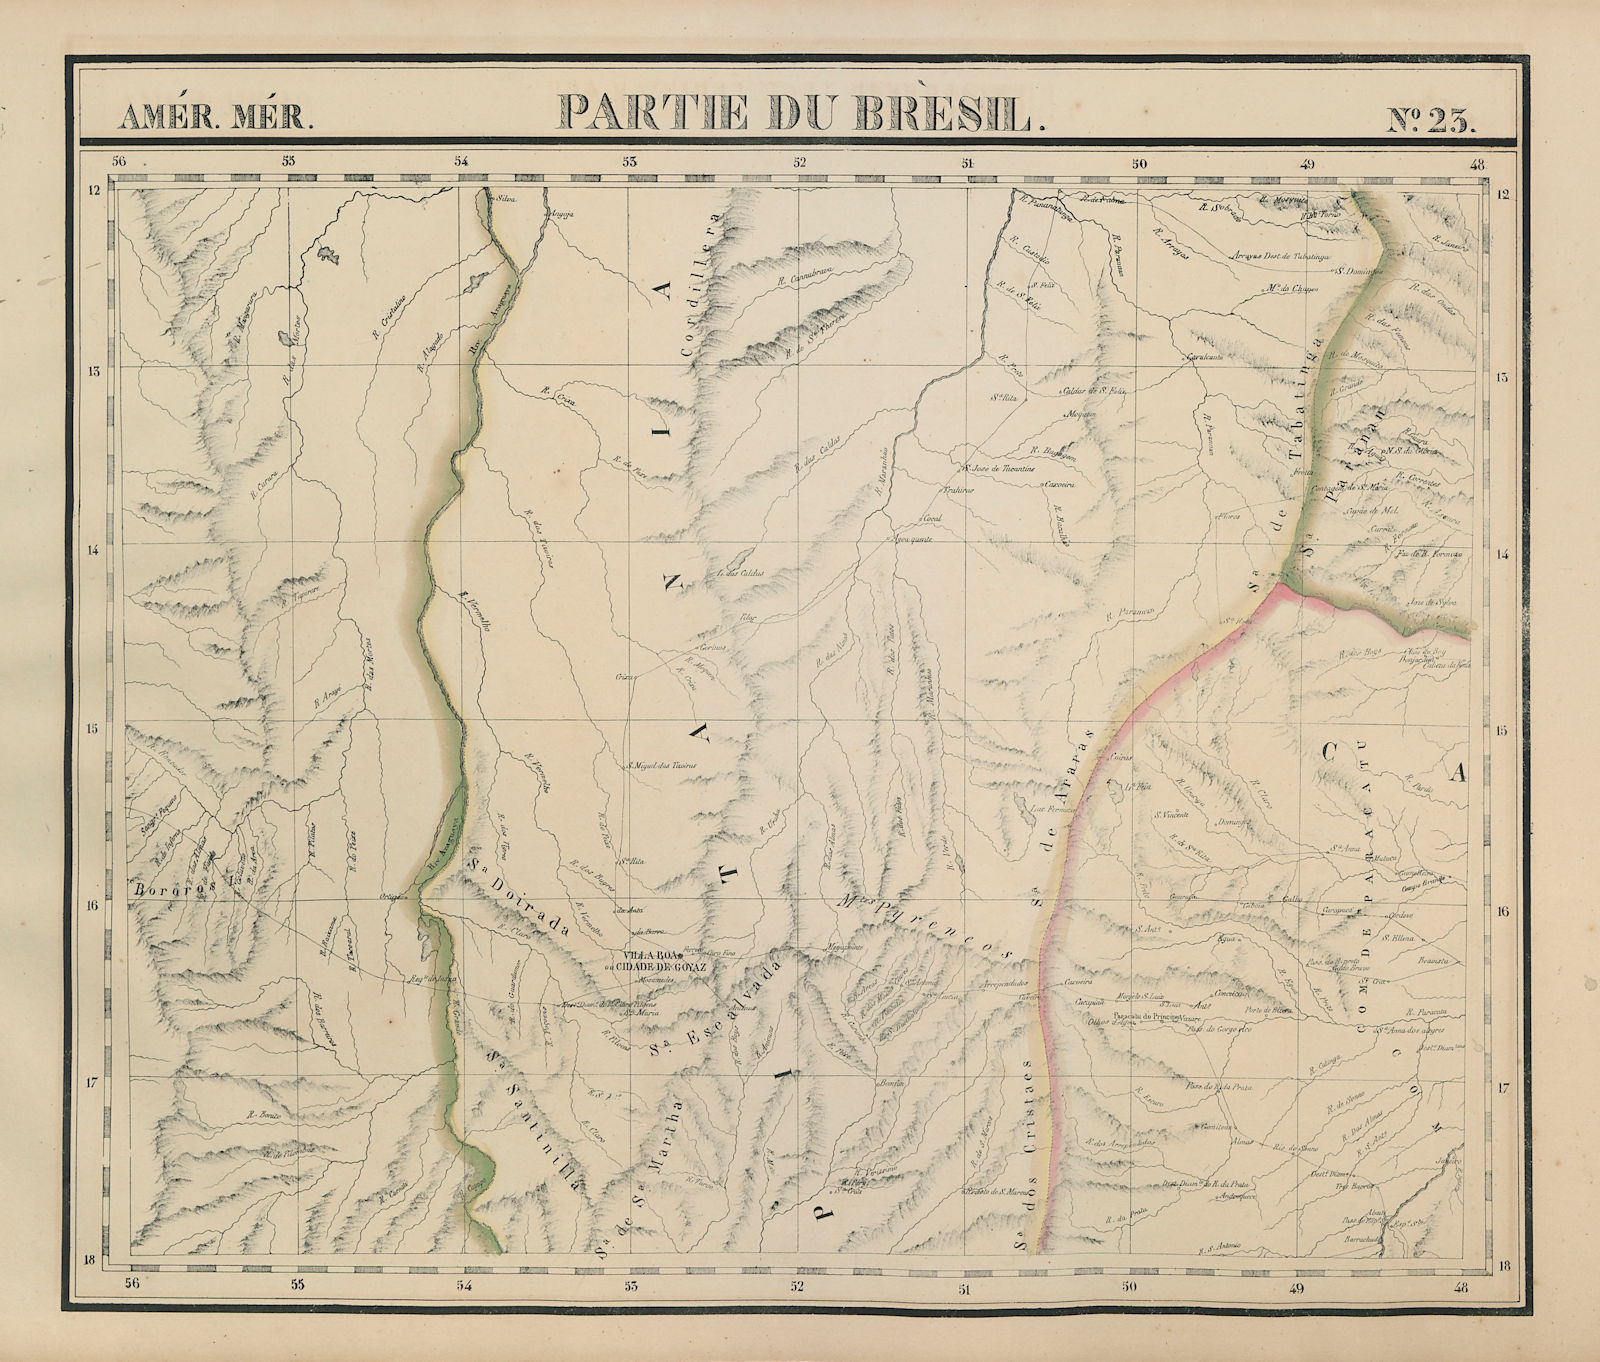 Amér. Mér. Brésil #23 South-central Brazil. MT TO GO DF MG VANDERMAELEN 1827 map